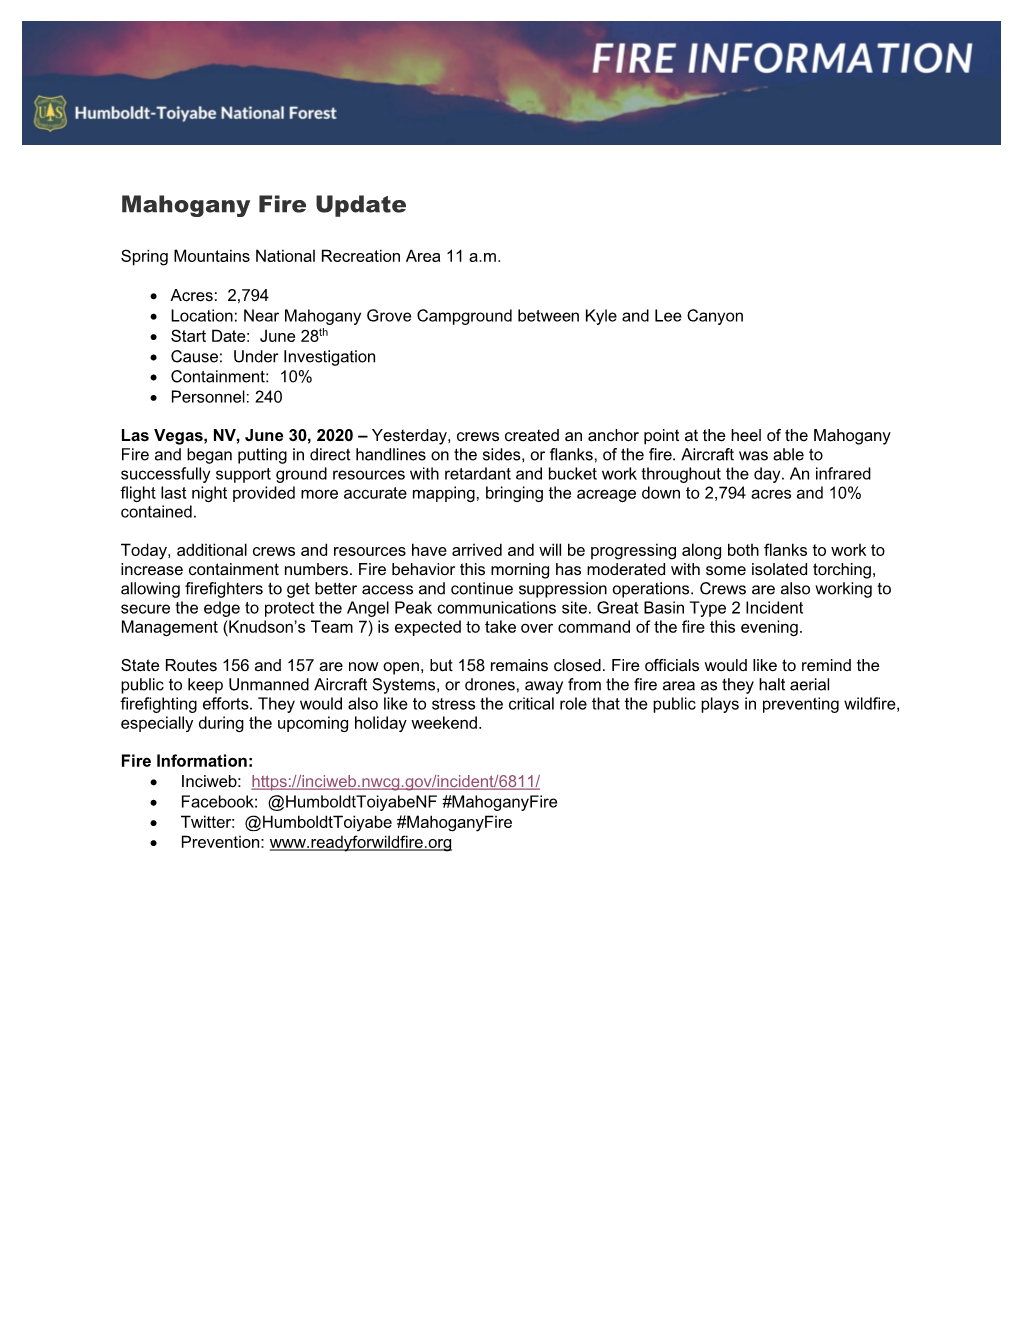 Mahogany Fire Update